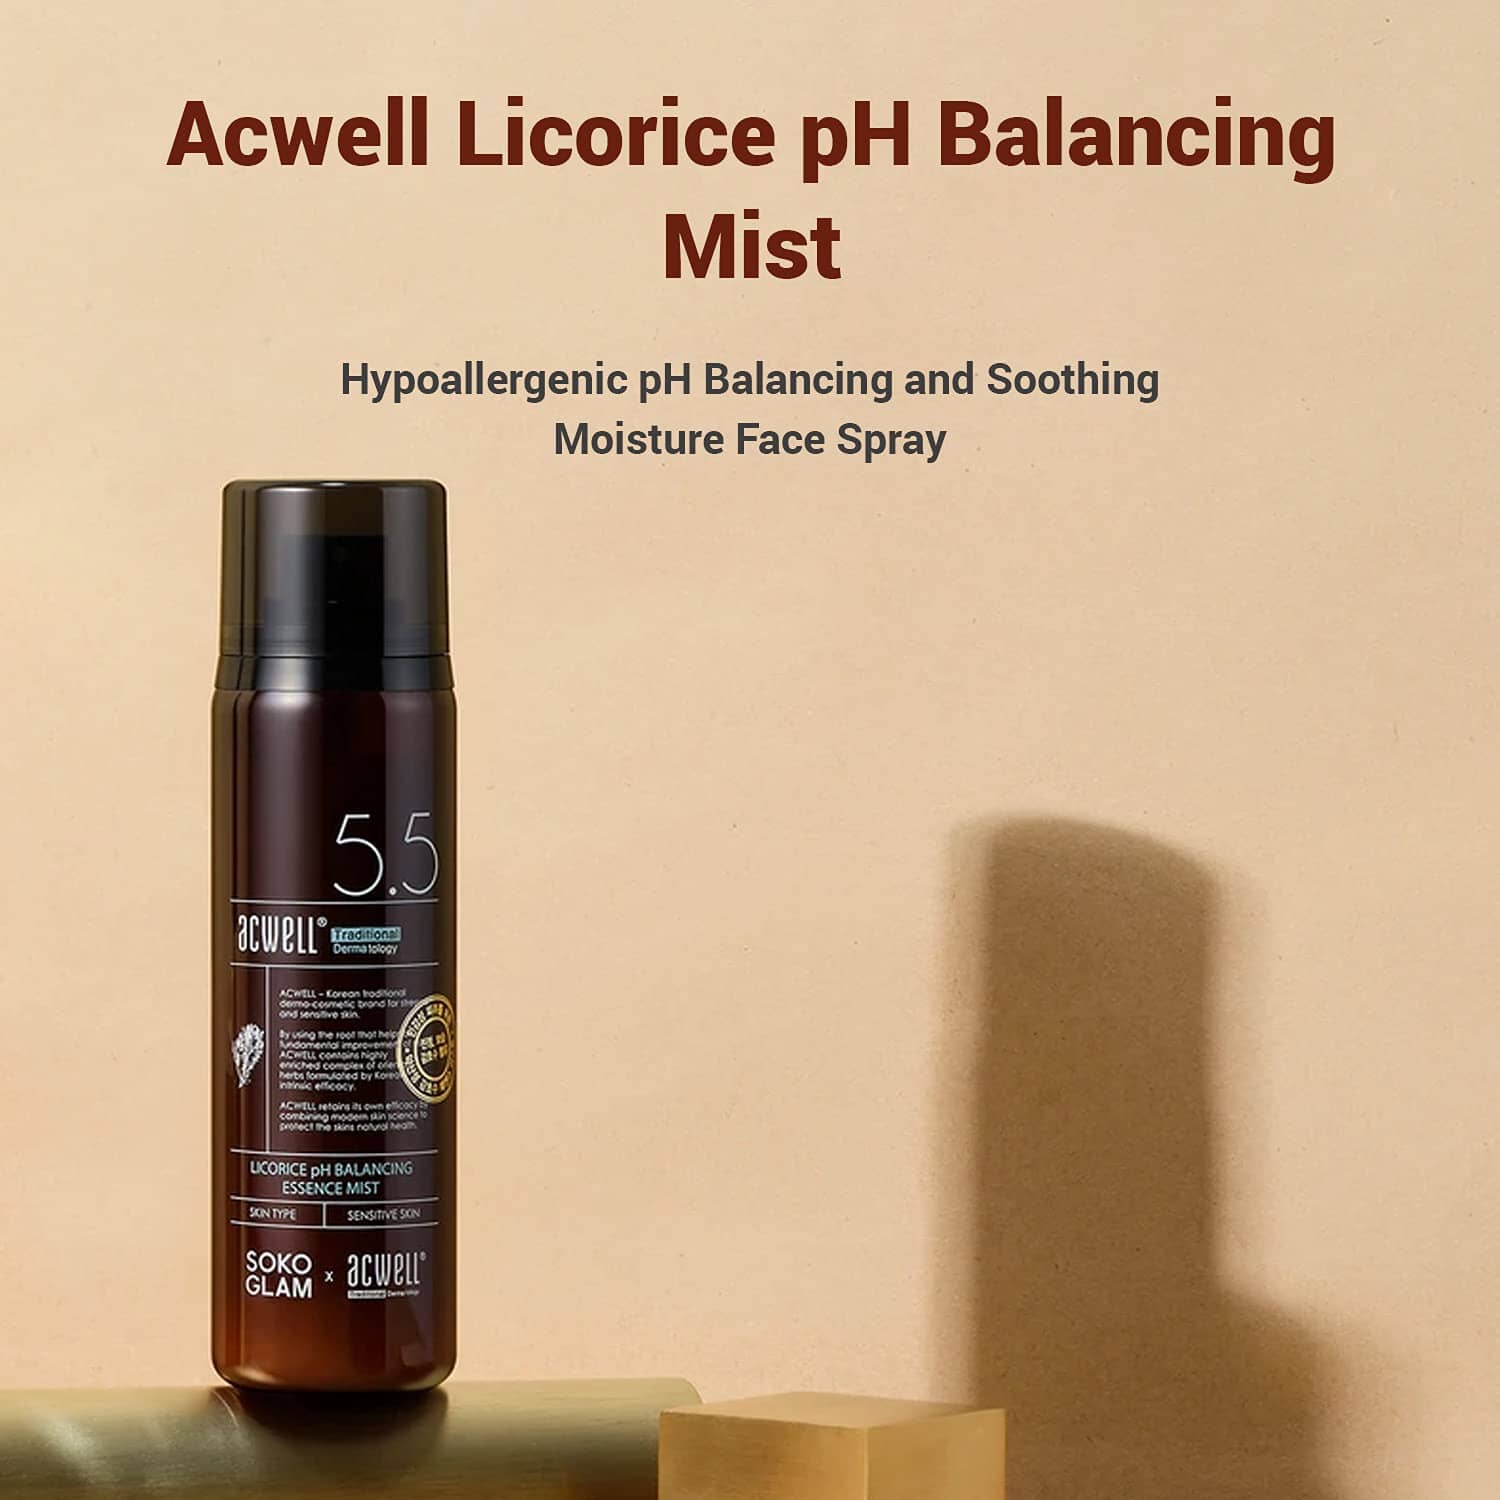 ACWELL Licorice pH Balancing Essence Mist 100ml Skin Care ACWELL ORION XO Sri Lanka